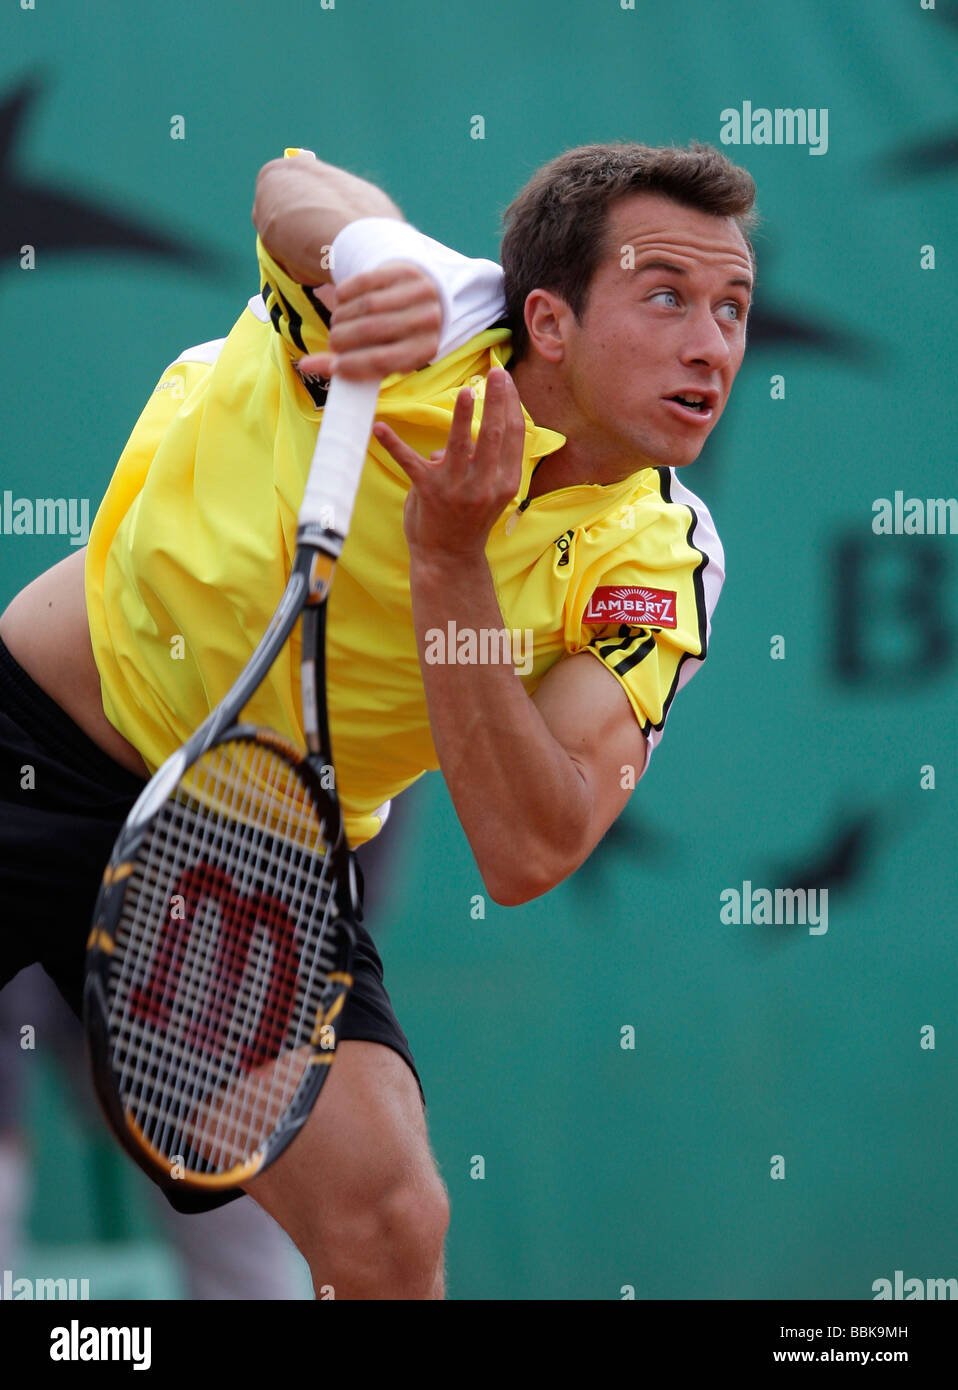 Tennis player Philipp Kohlschreiber playing a service at Roland Garros Stock Photo